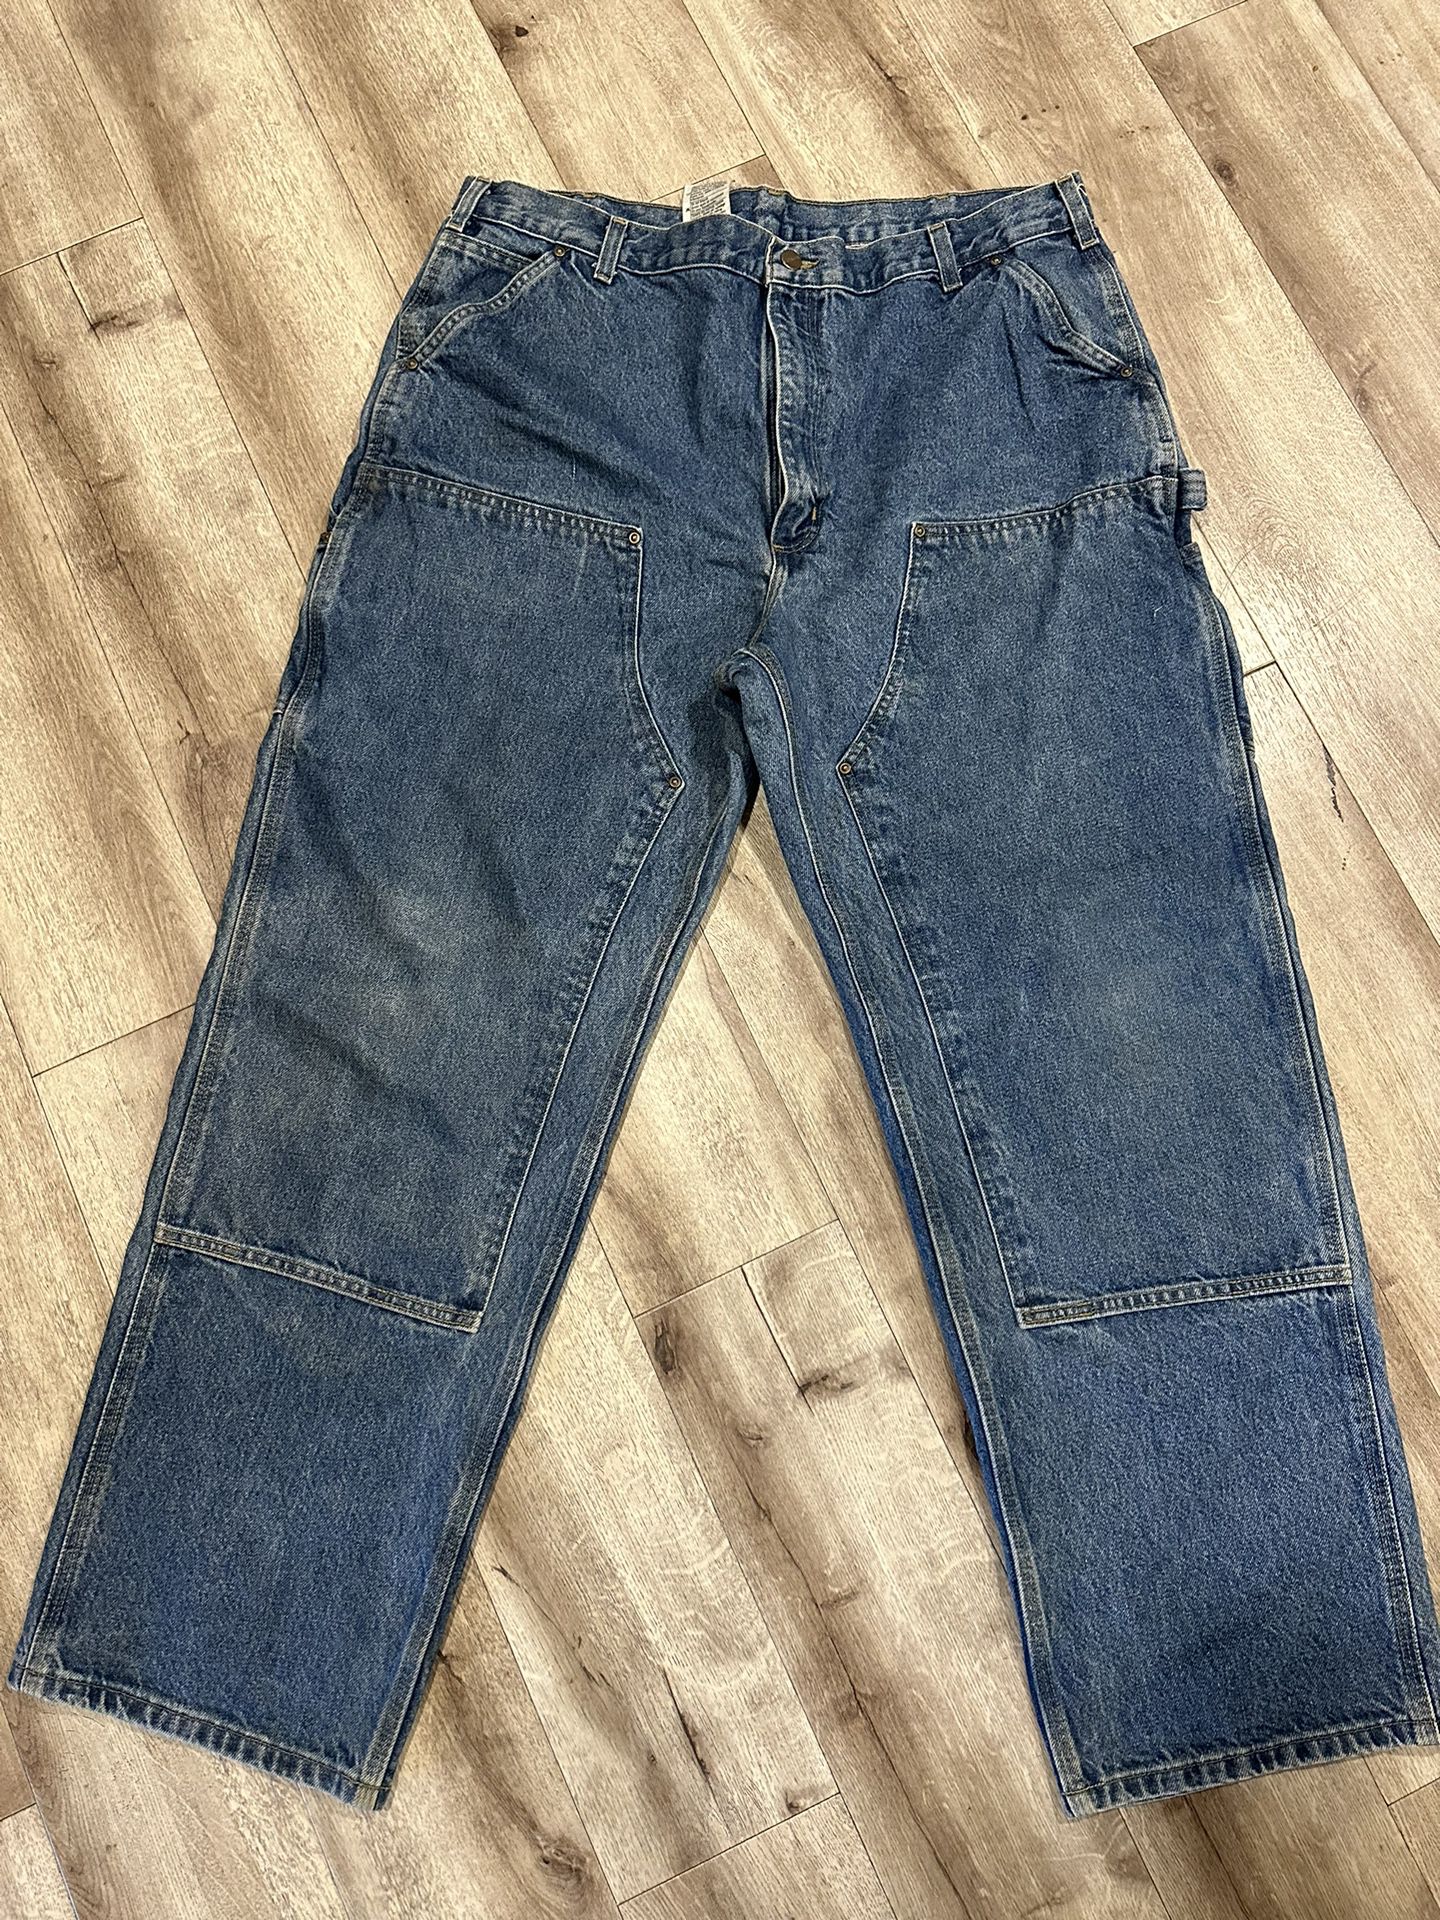 Carhartt Jeans B73DST Men's 42x32 Double Knee Original Fit Denim Blue ...